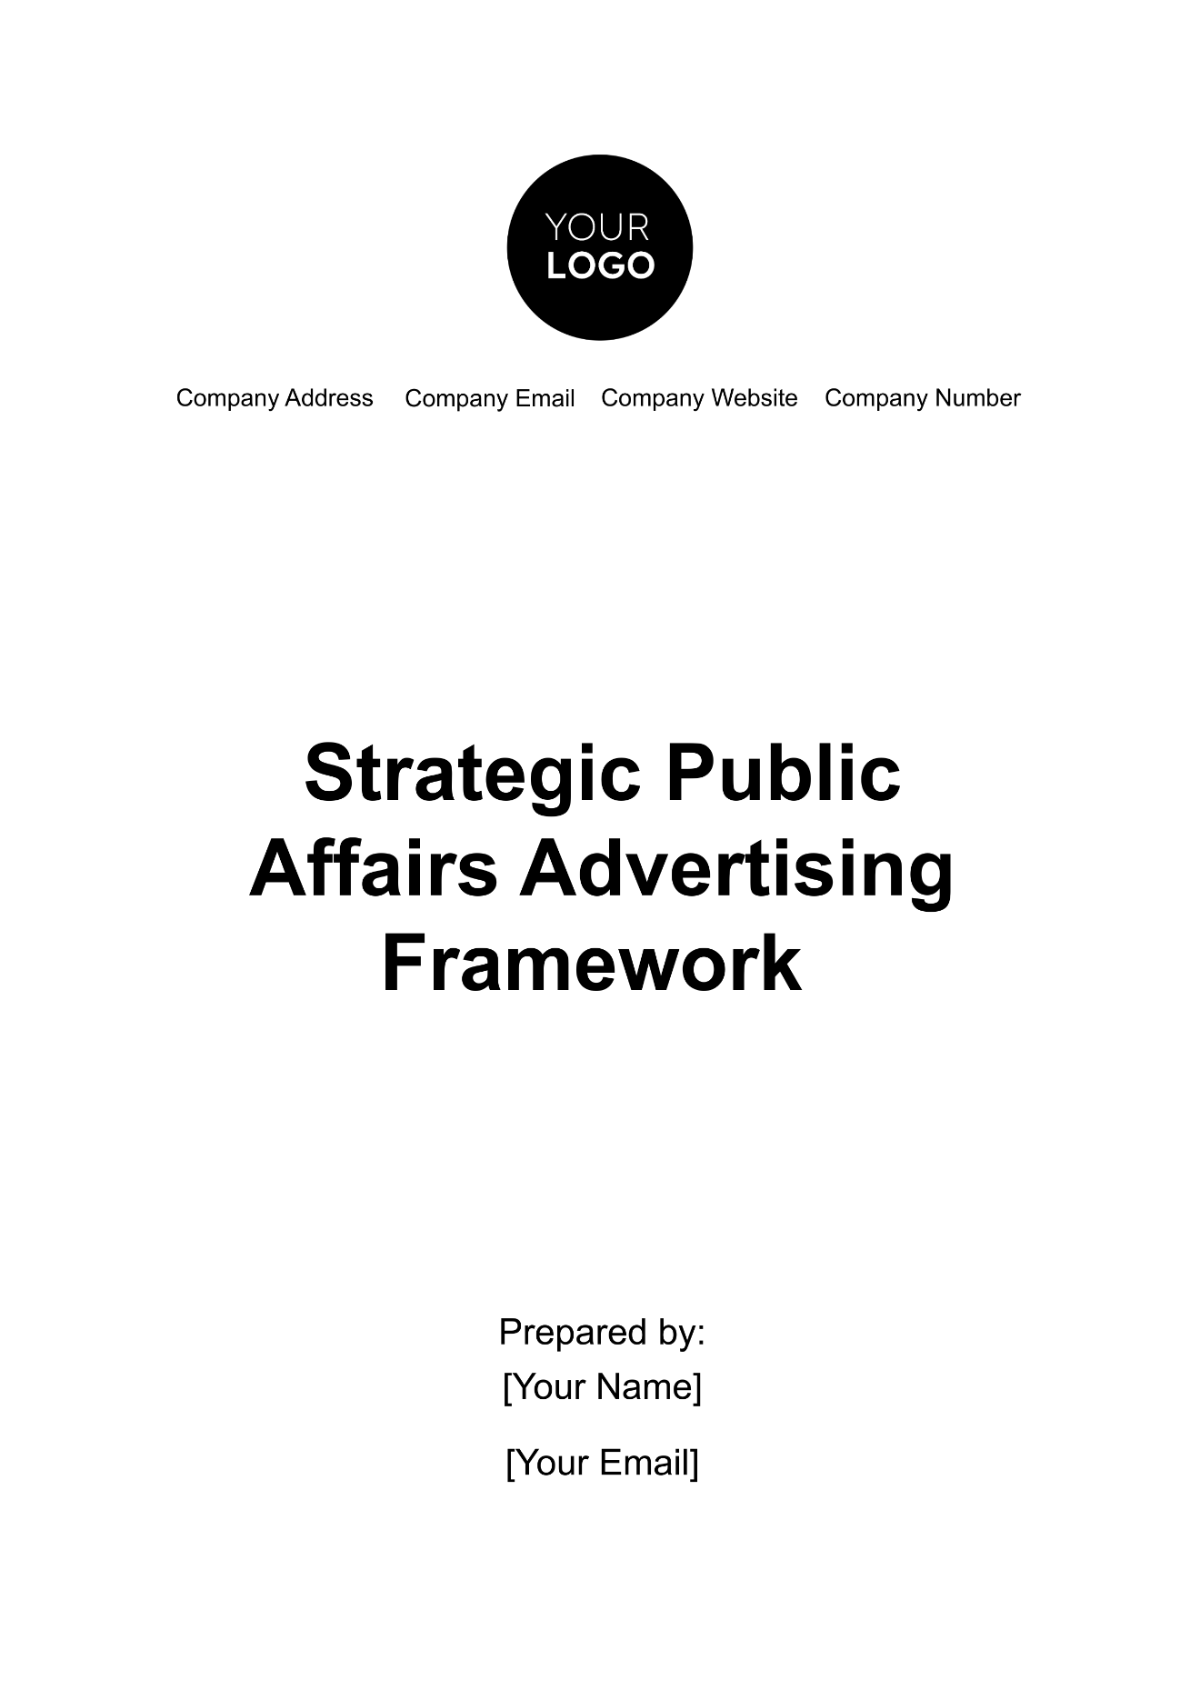 Strategic Public Affairs Advertising Framework Template